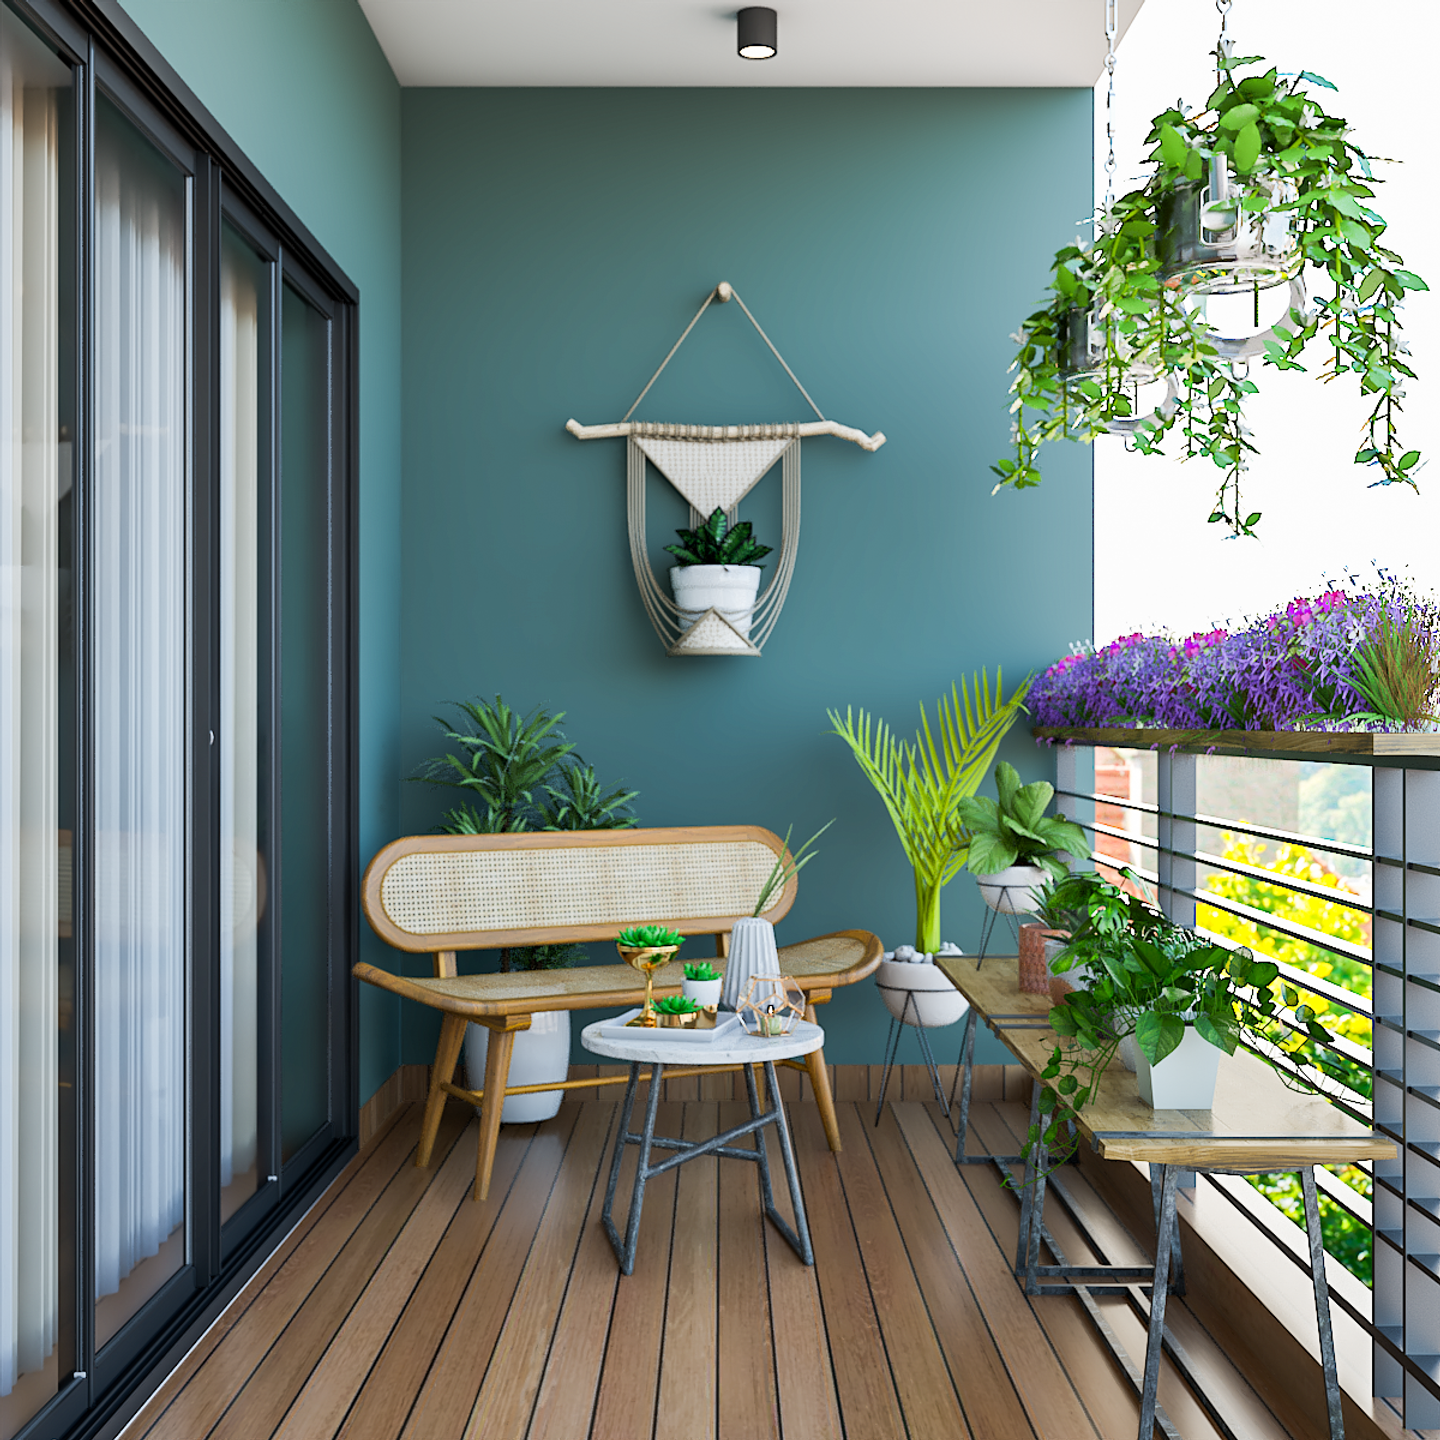 Balcony Design With Rattan Bench - Livspace